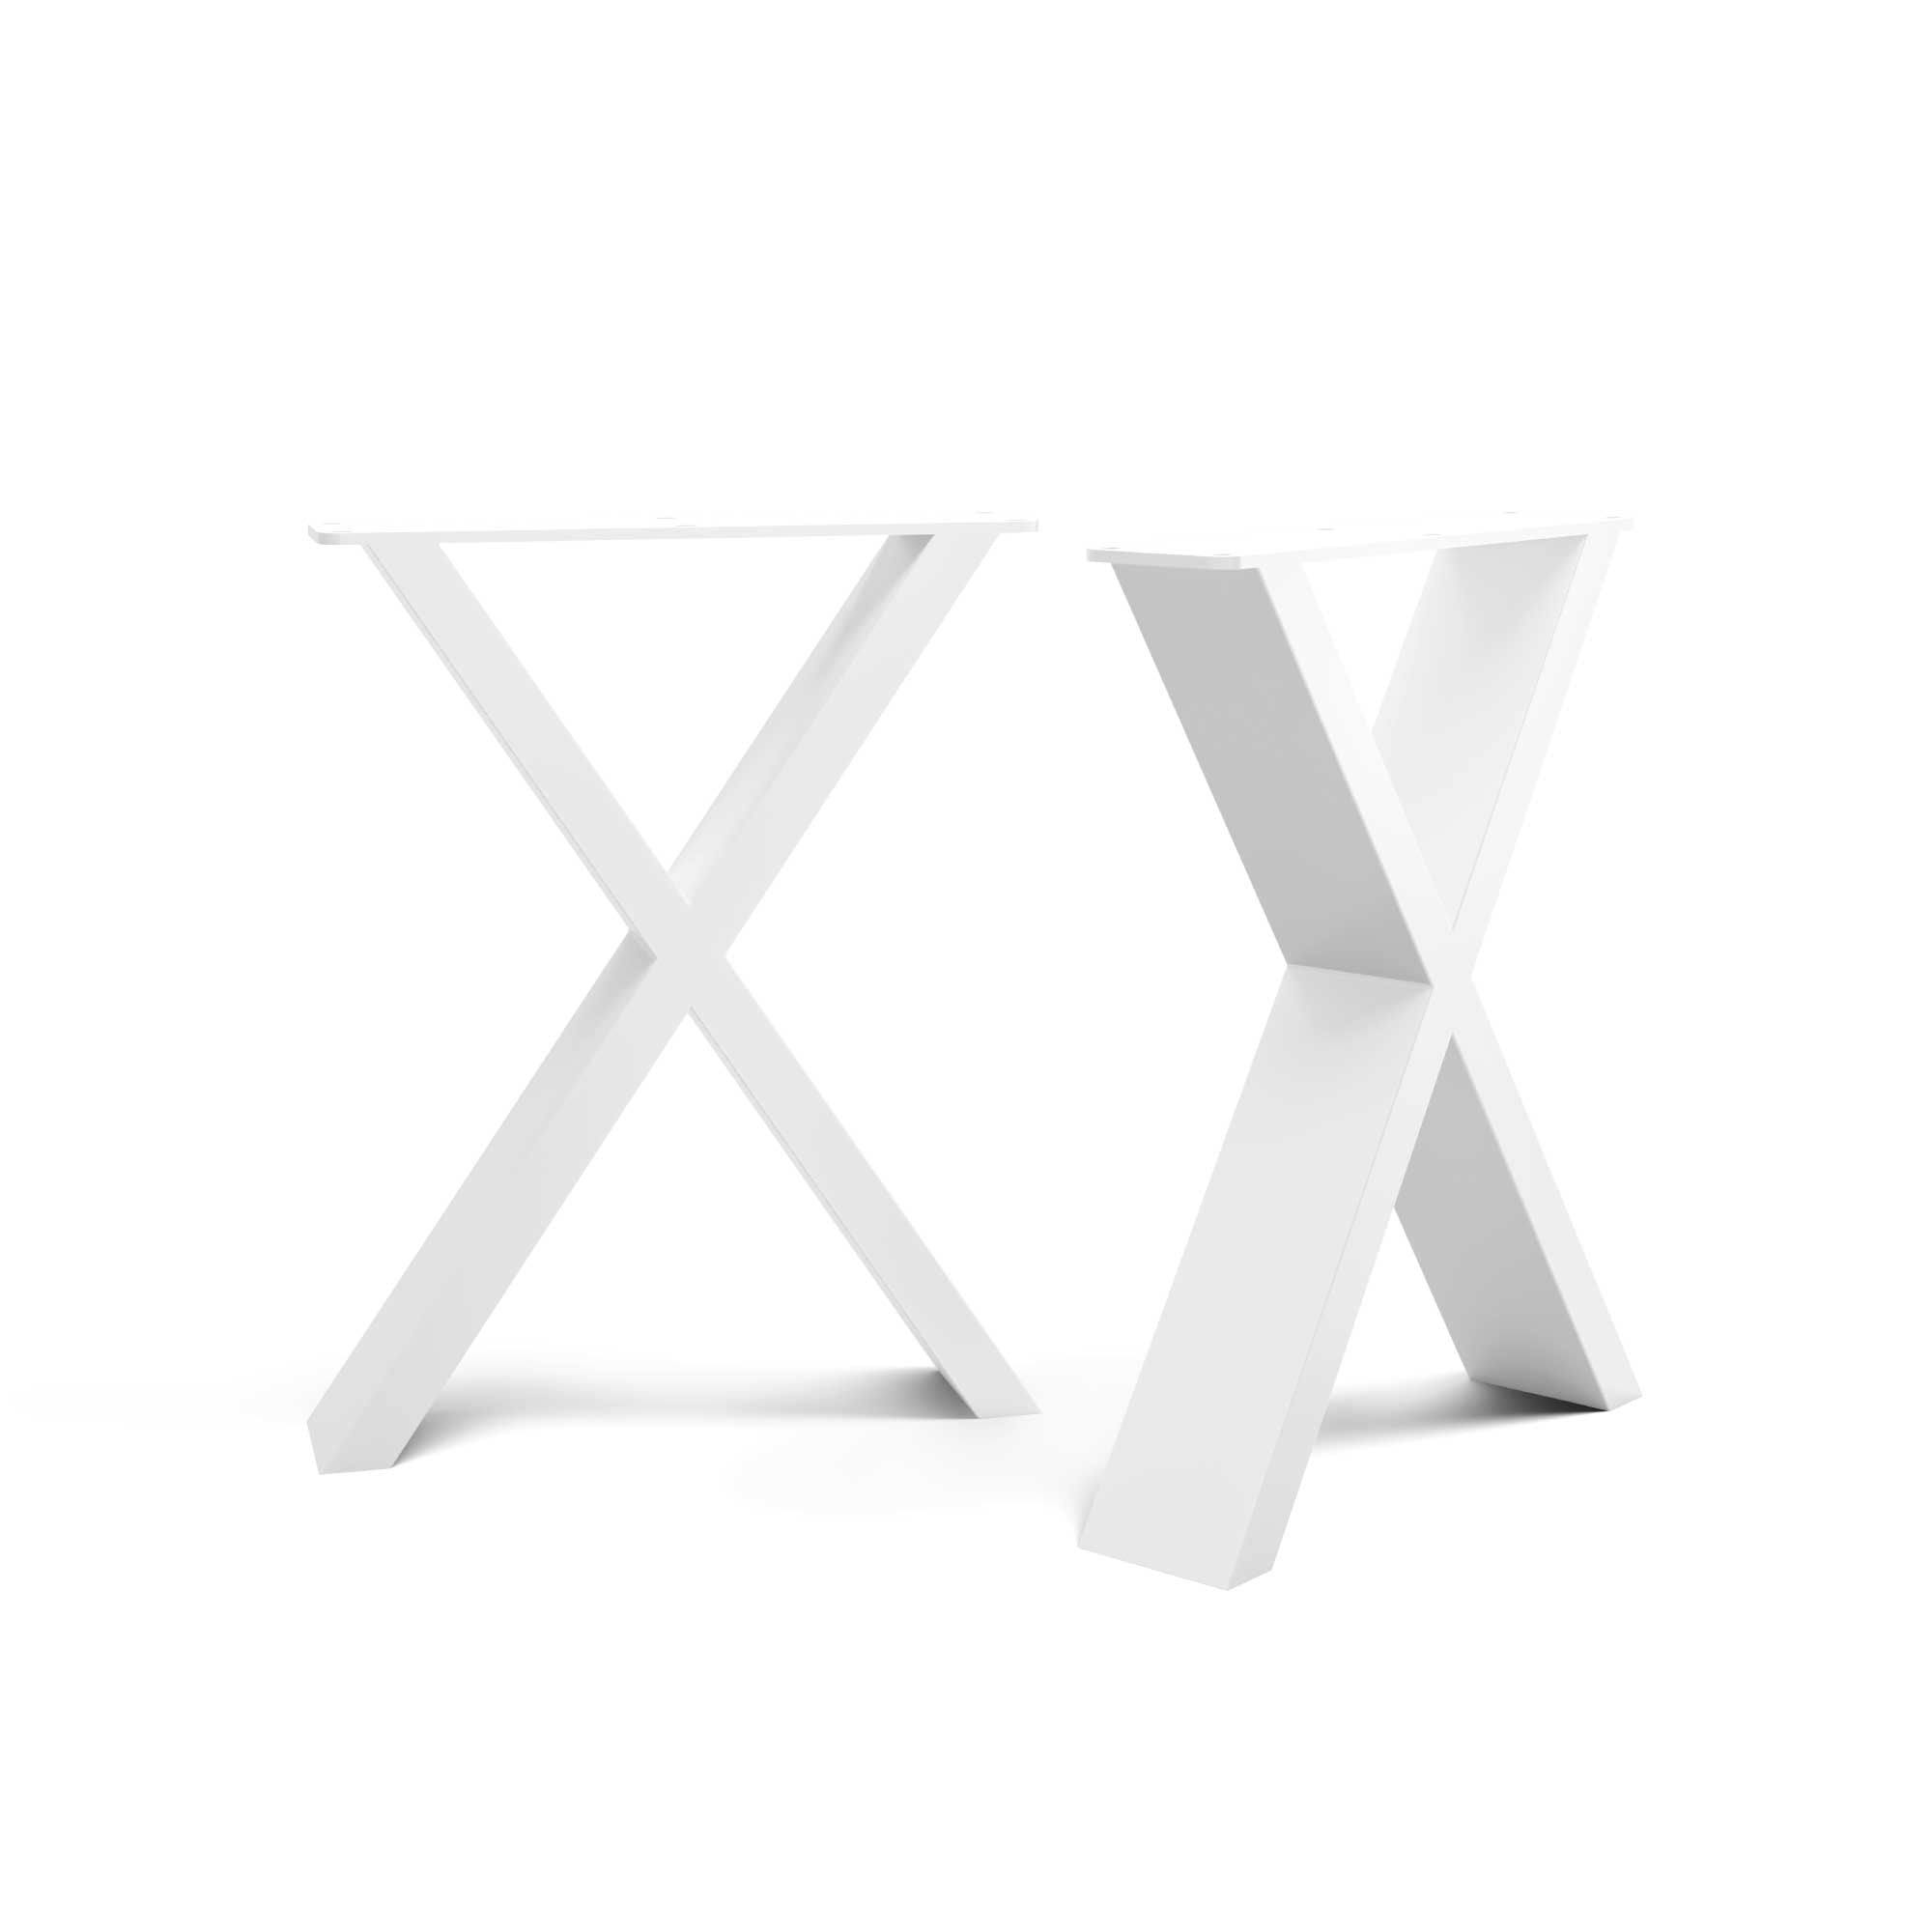 X-Frame Industrial legs | 40cm Bench